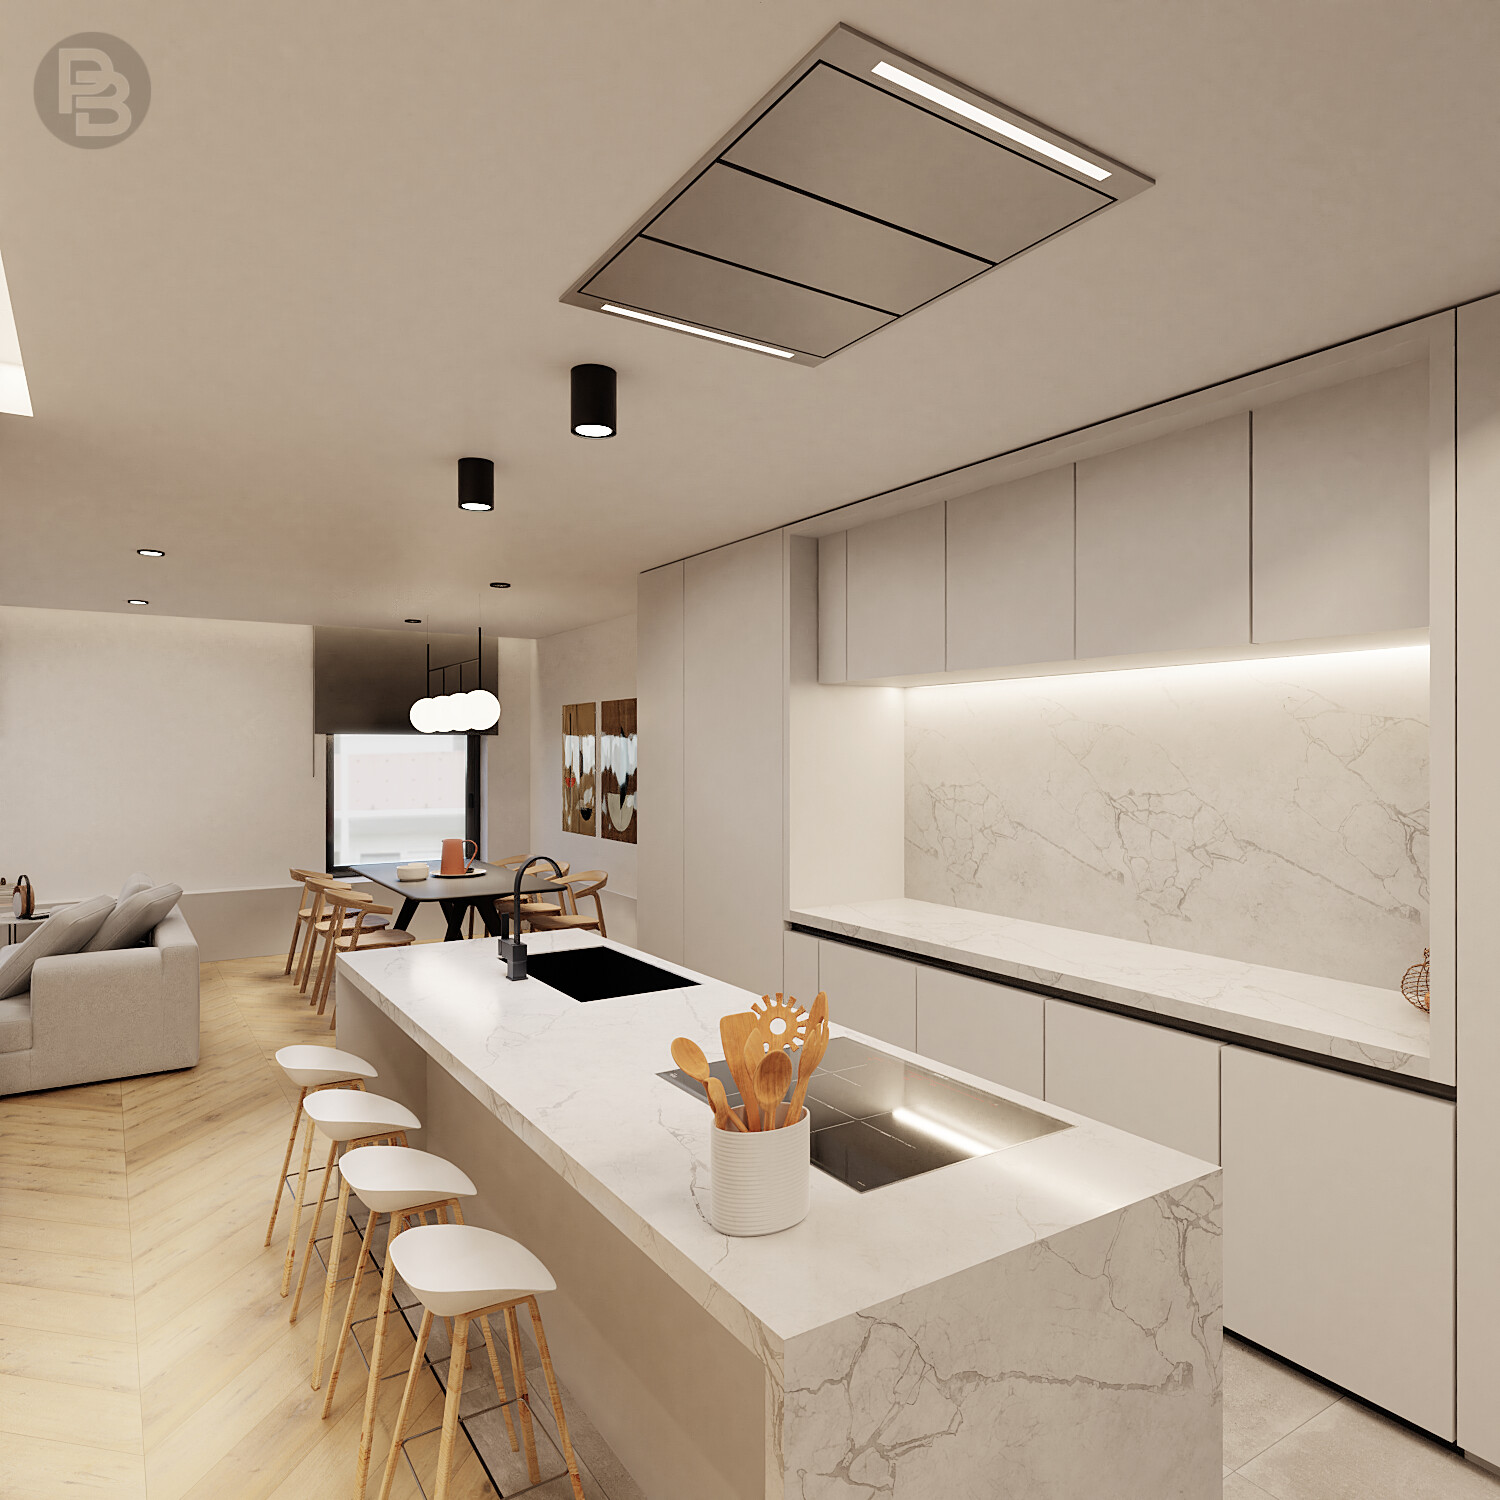 Livingroom + kitchen